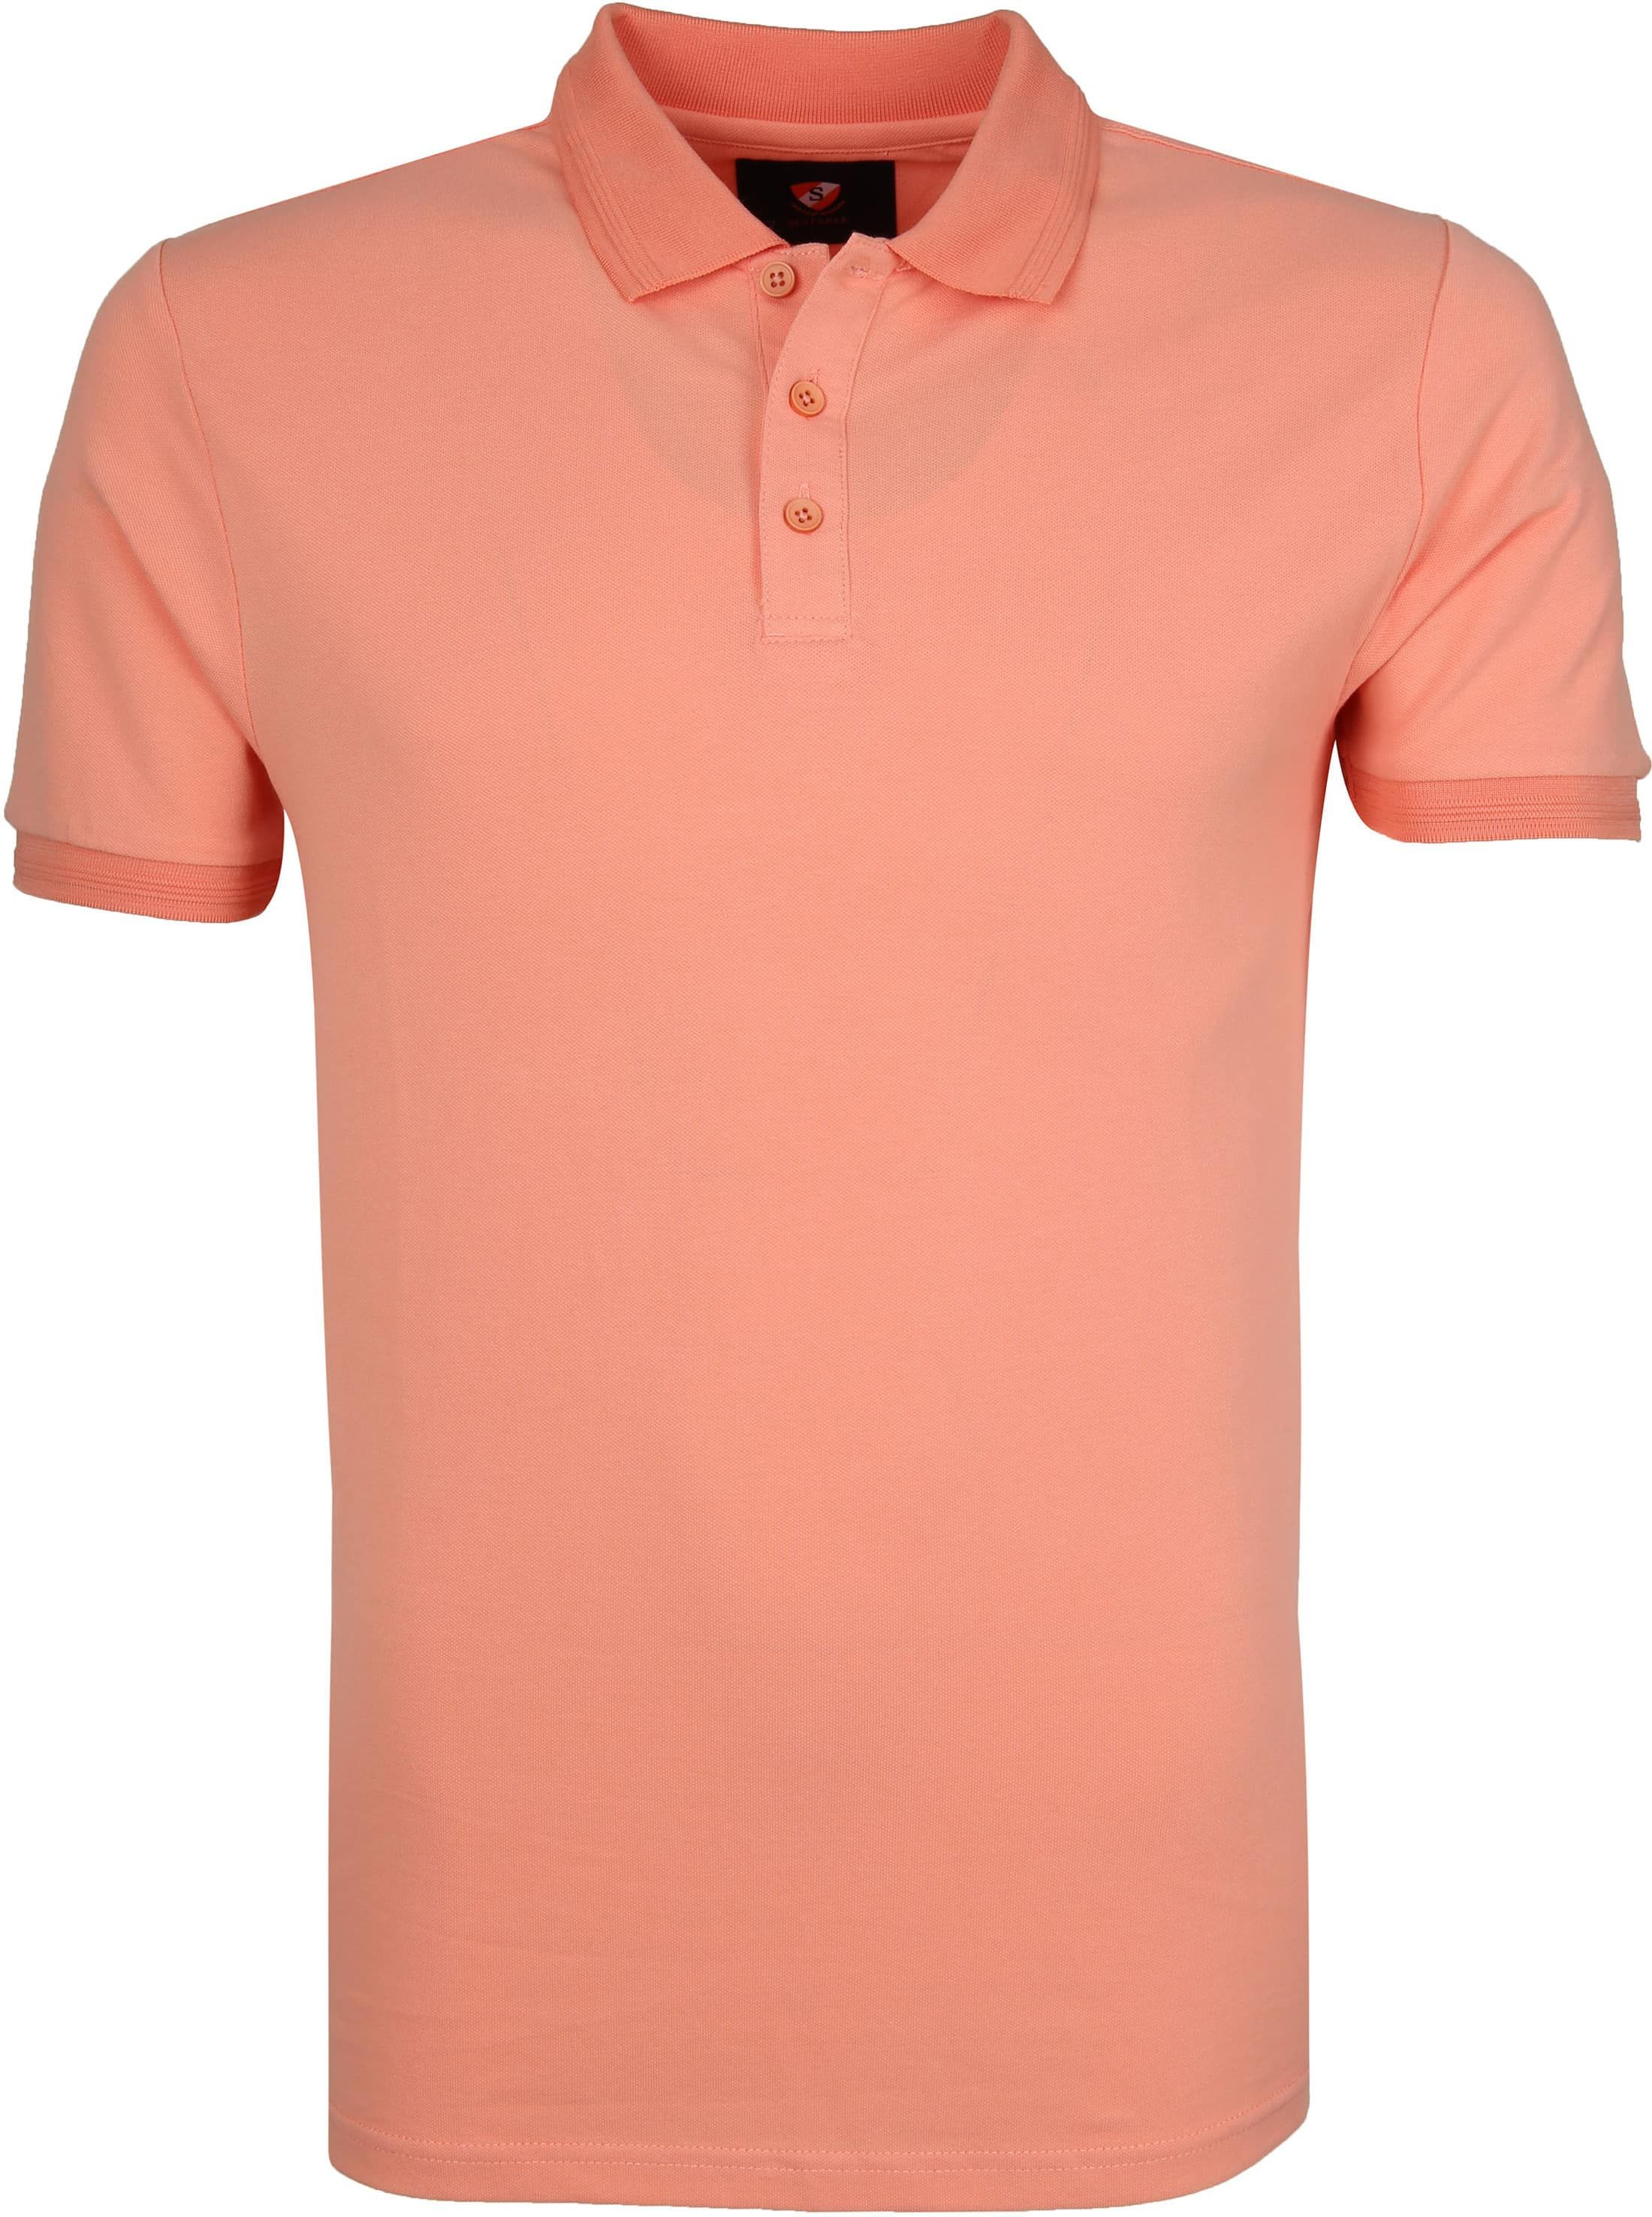 Suitable Oscar Polo Shirt Salmon Orange size M